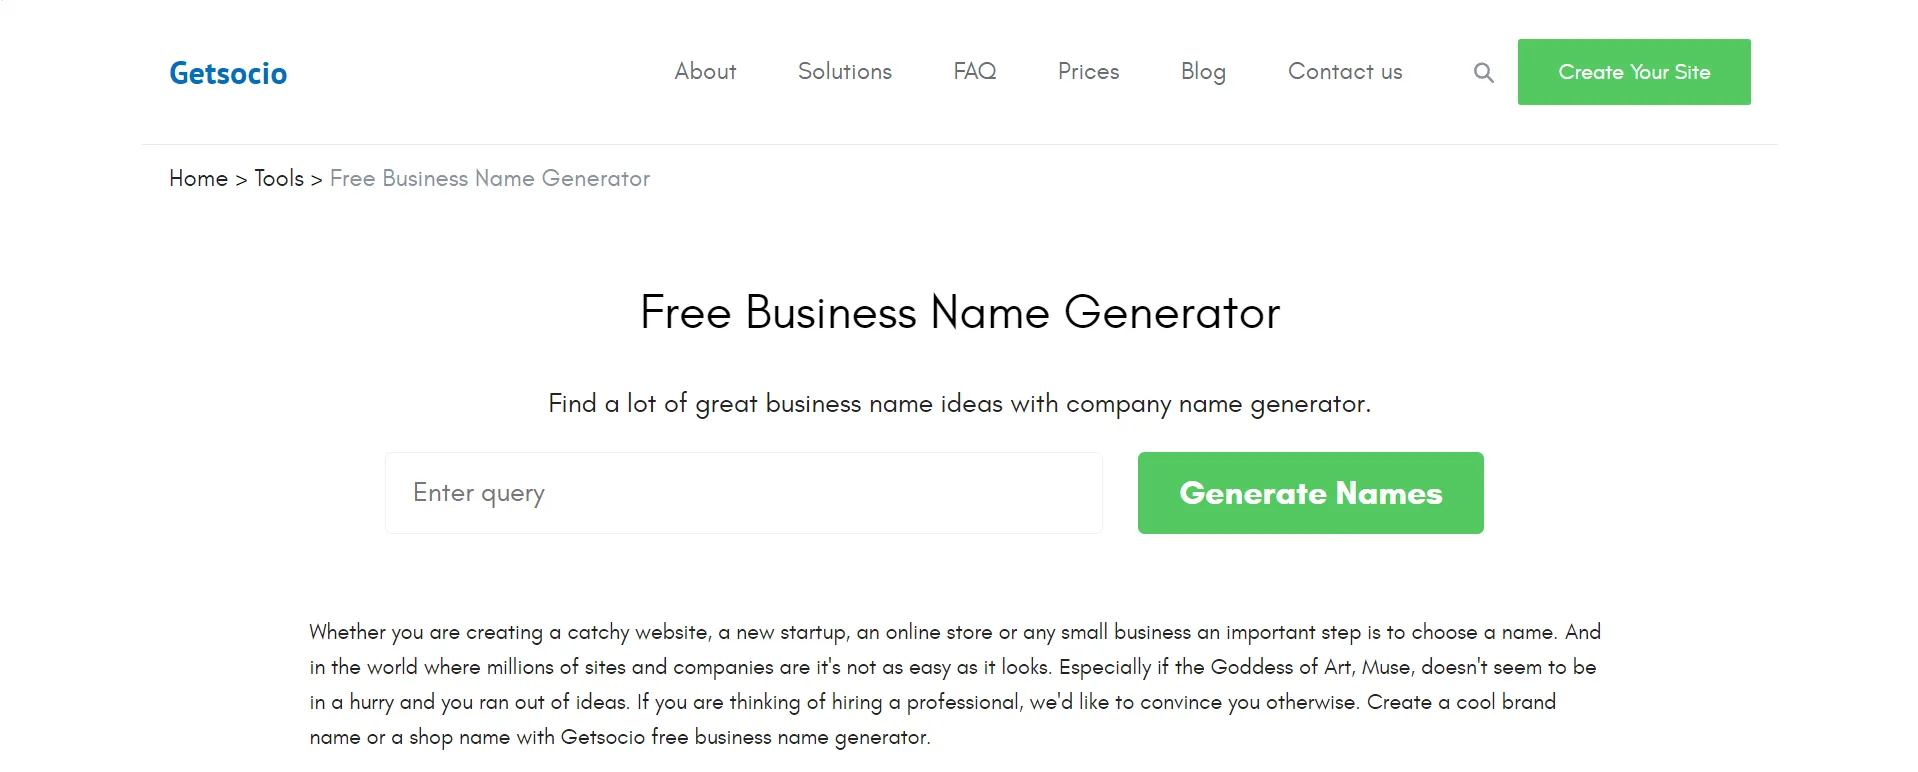 Getsocio's free business name generator